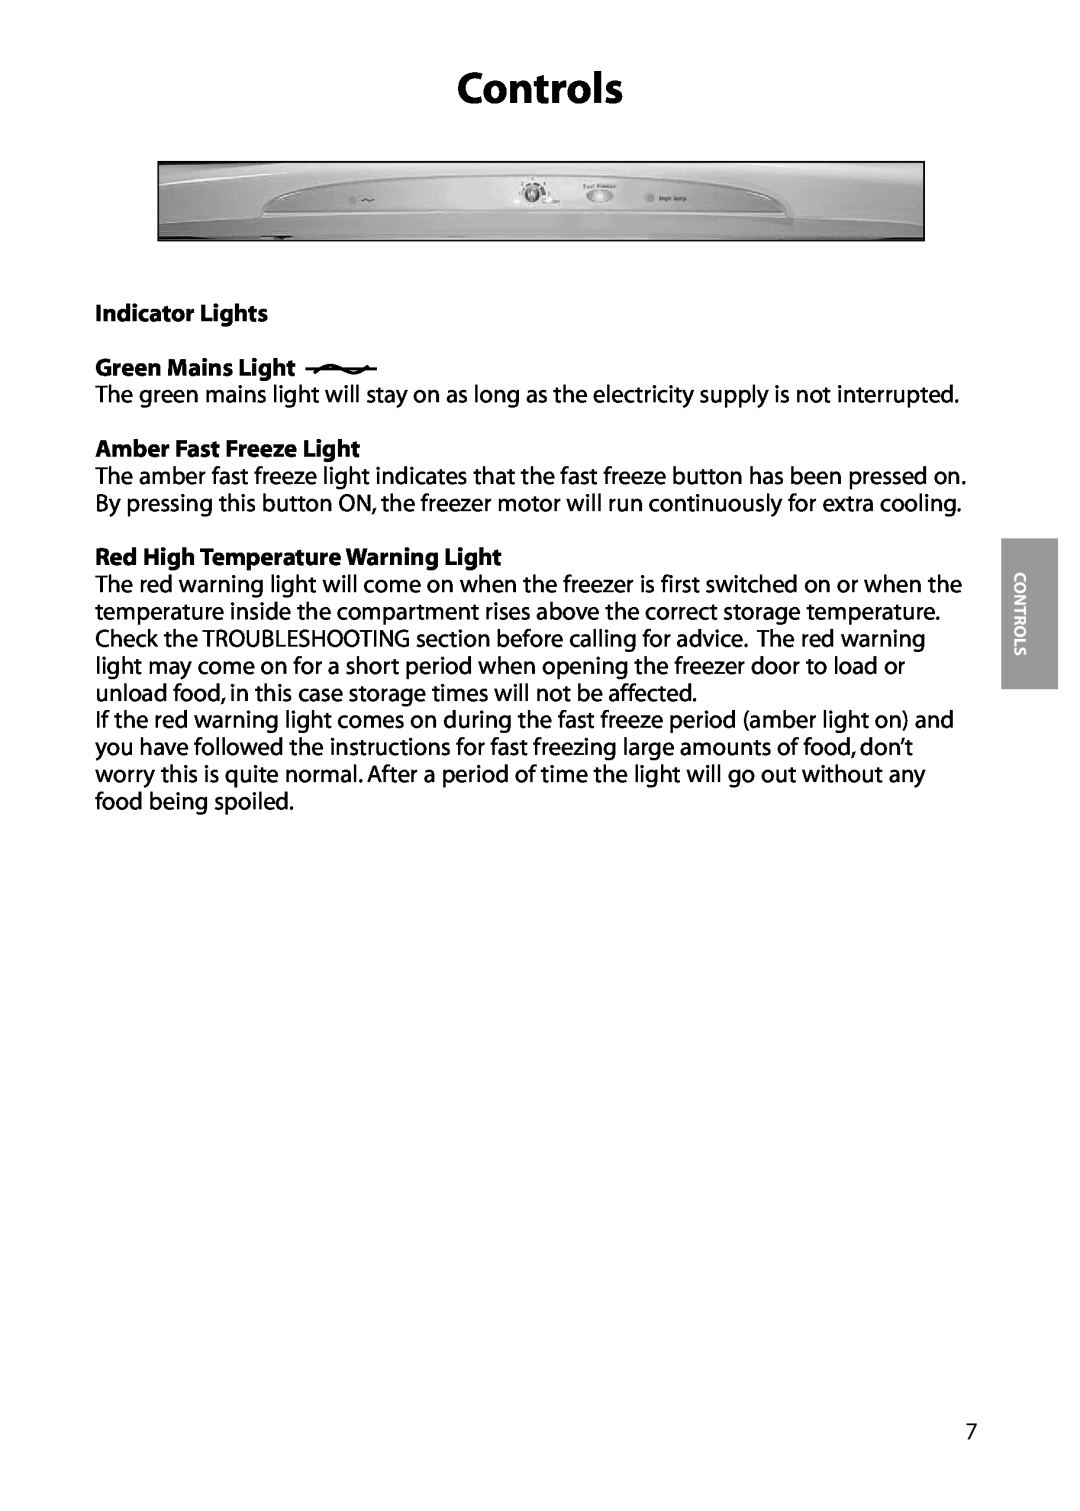 Hotpoint FZM54 Indicator Lights Green Mains Light, Amber Fast Freeze Light, Red High Temperature Warning Light, Controls 